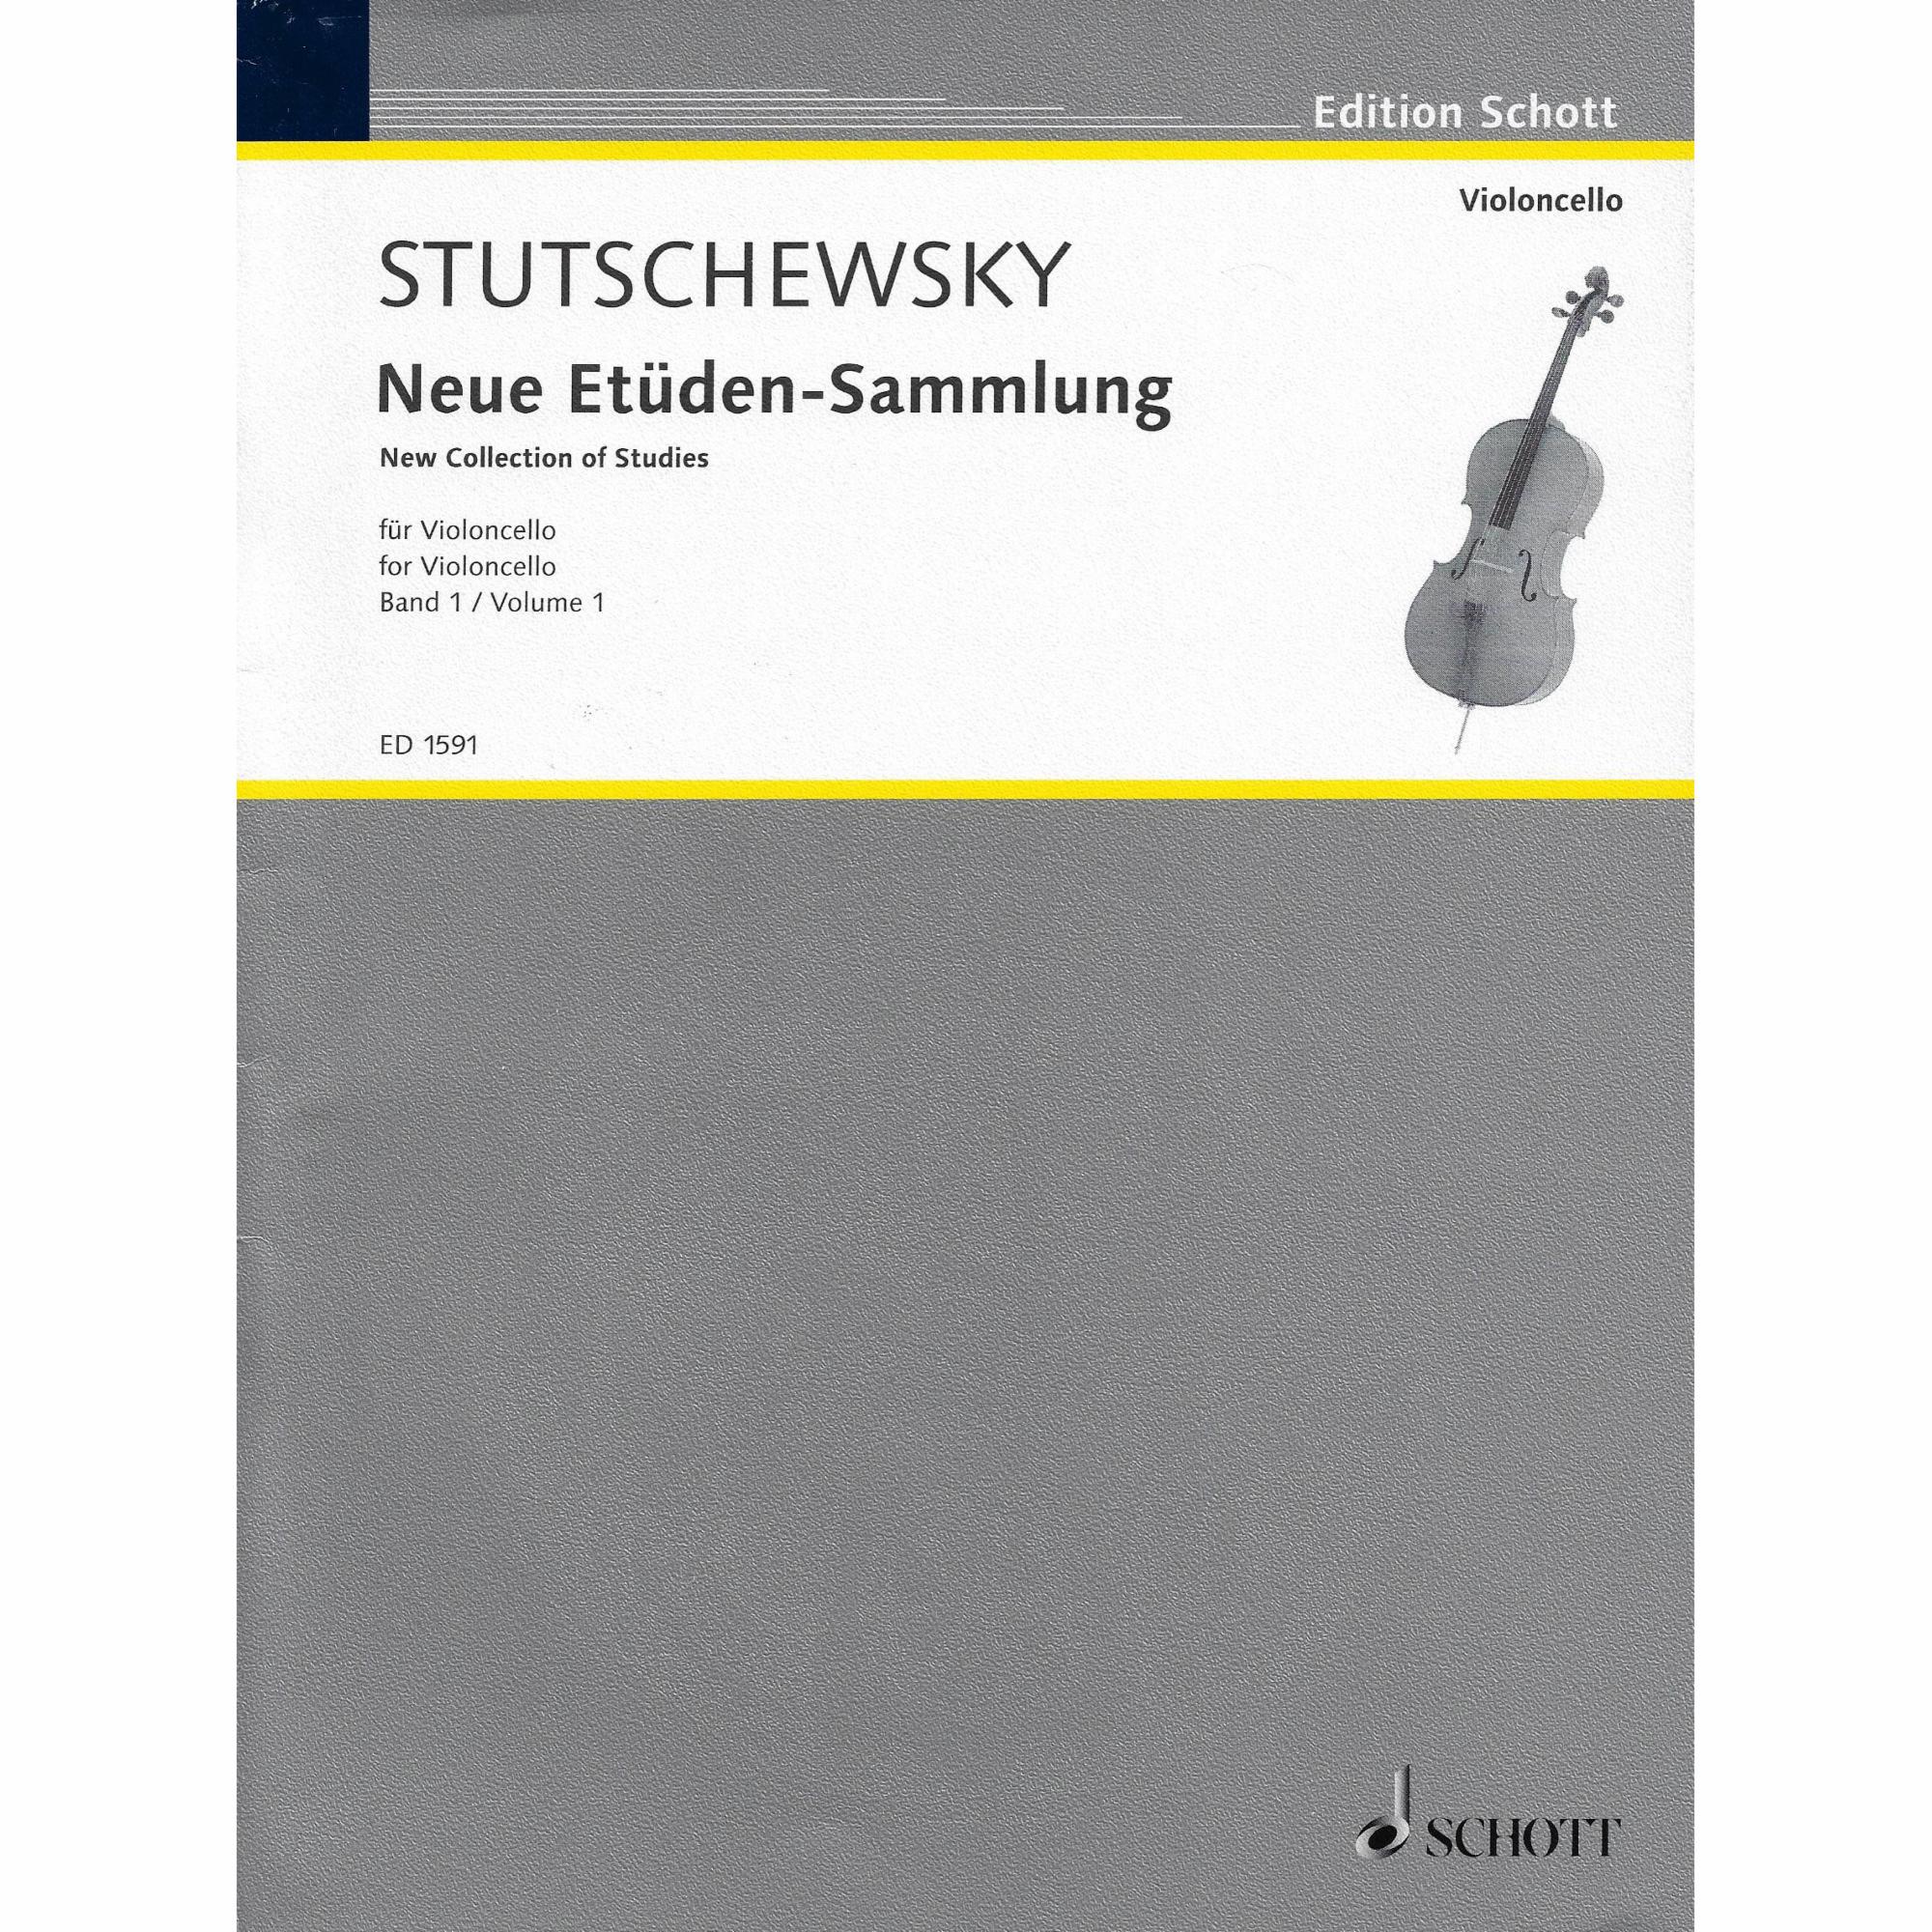 Stutschewsky -- New Collection of Studies, Volumes 1-4